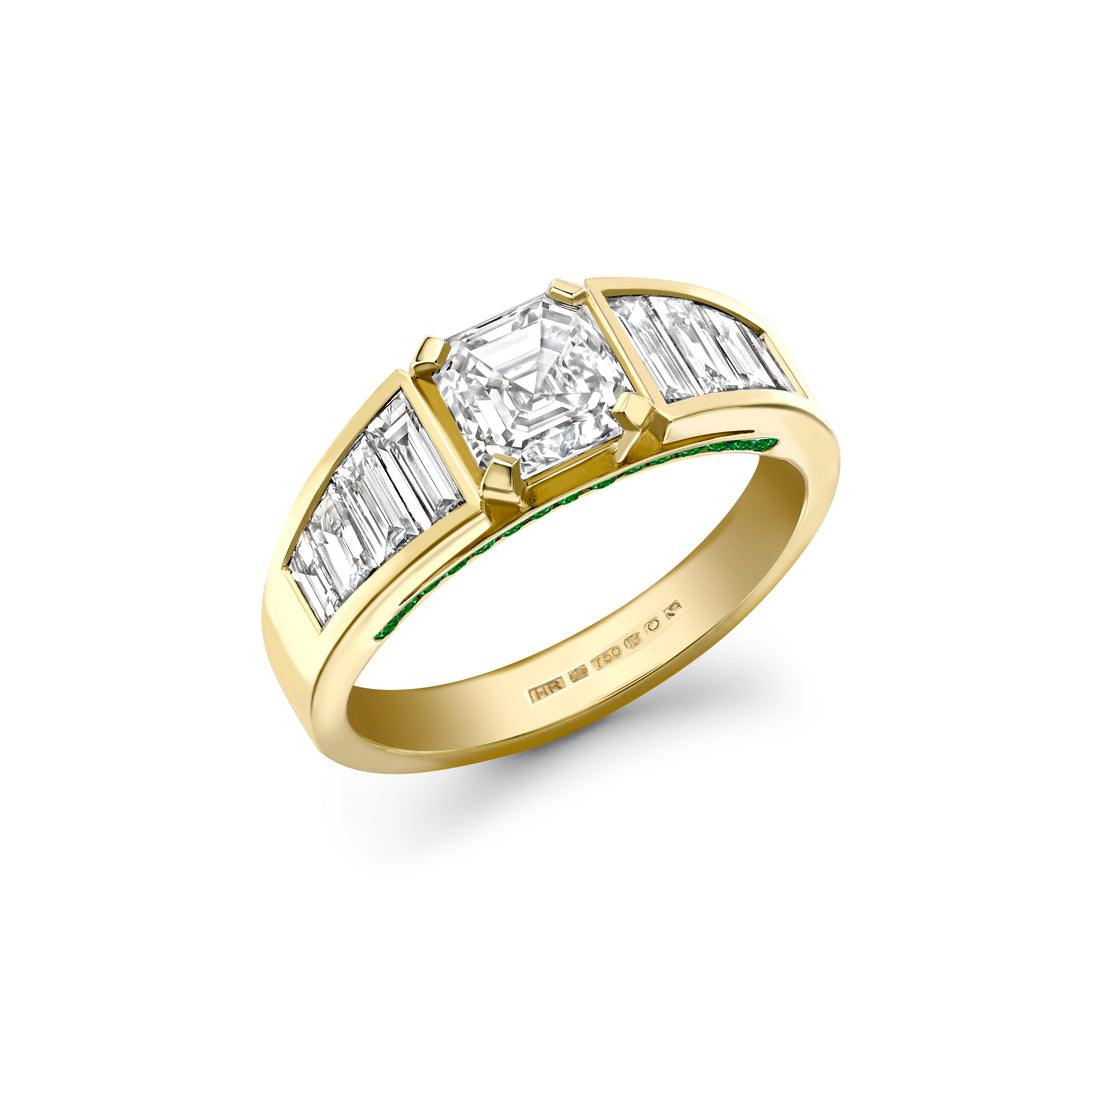  Assher Cut Diamond & Emerald Ring by Hattie Rickards | The Cut London